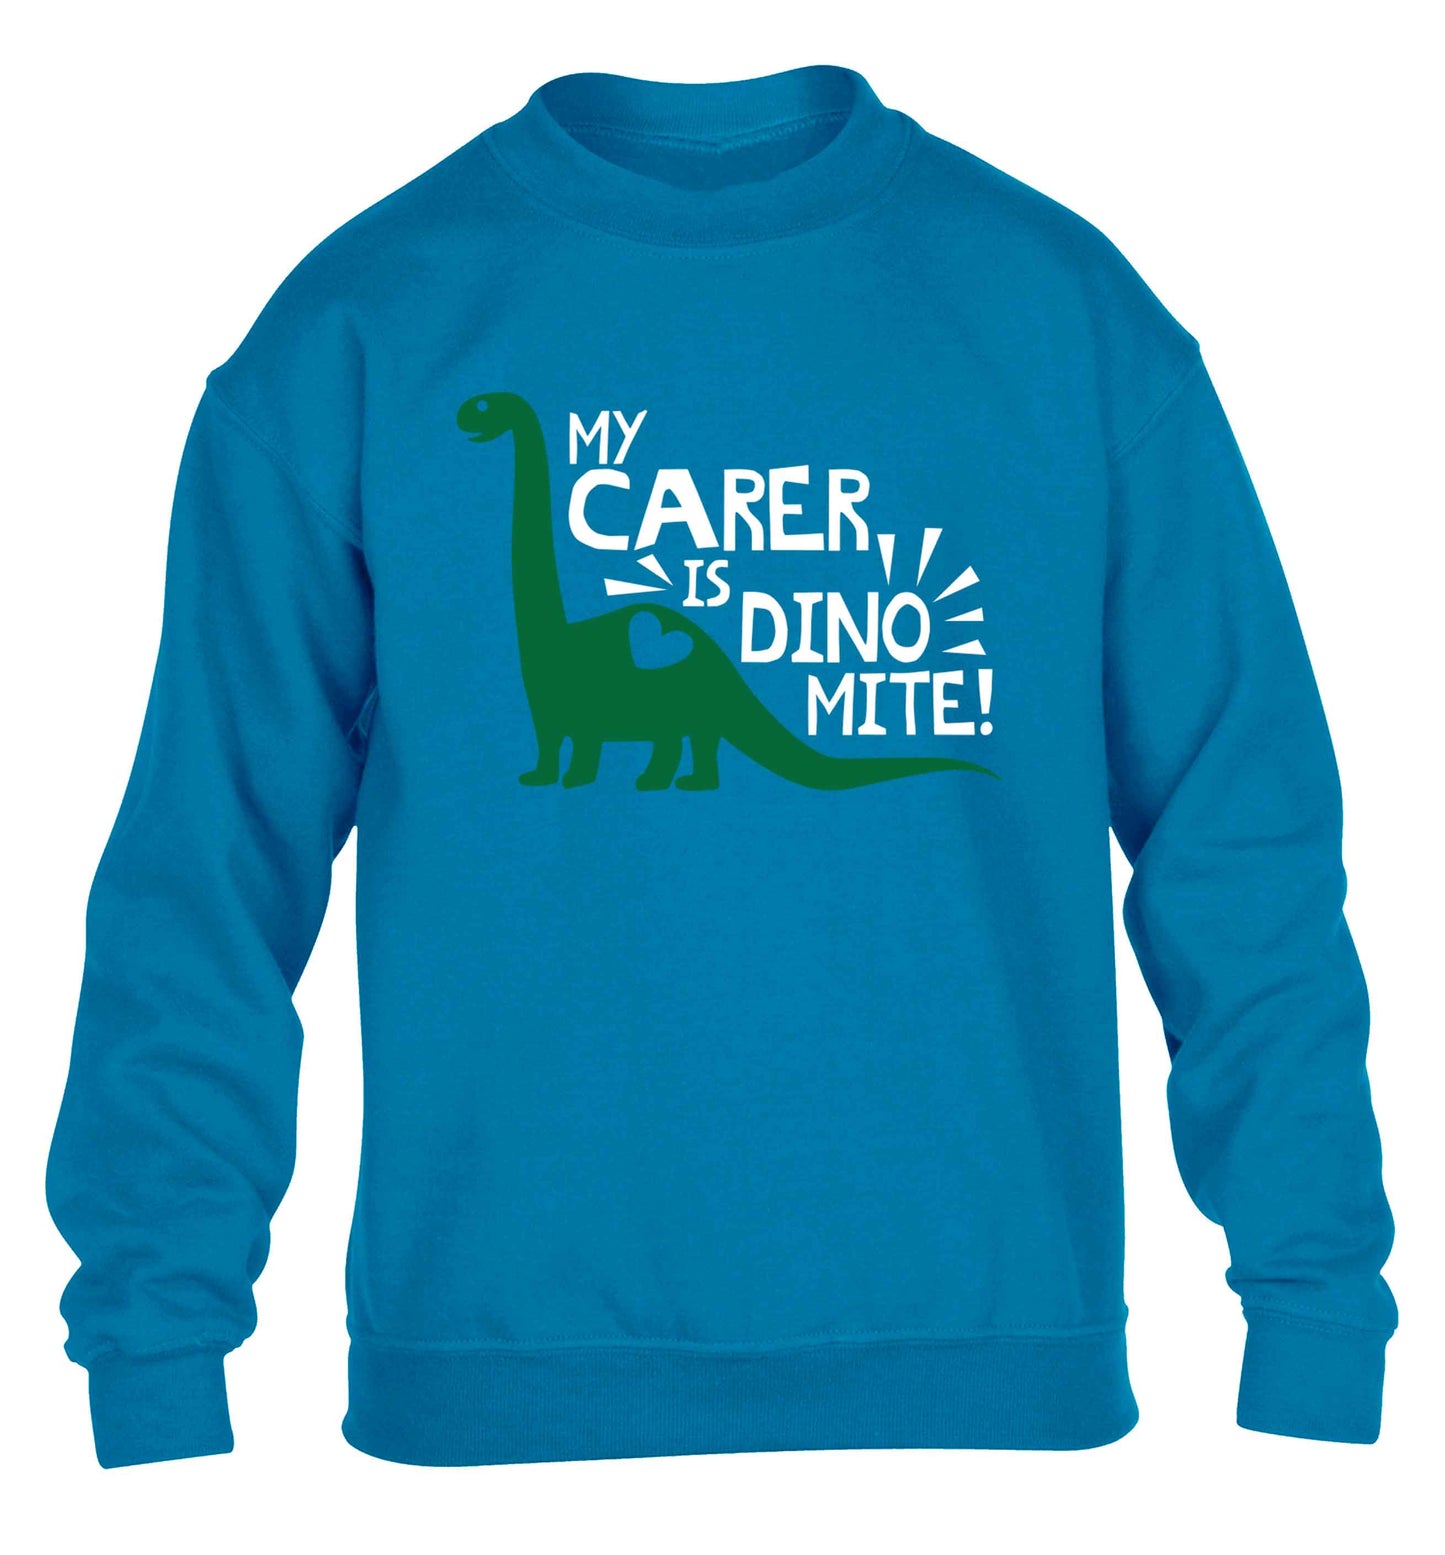 My carer is dinomite! children's blue sweater 12-13 Years